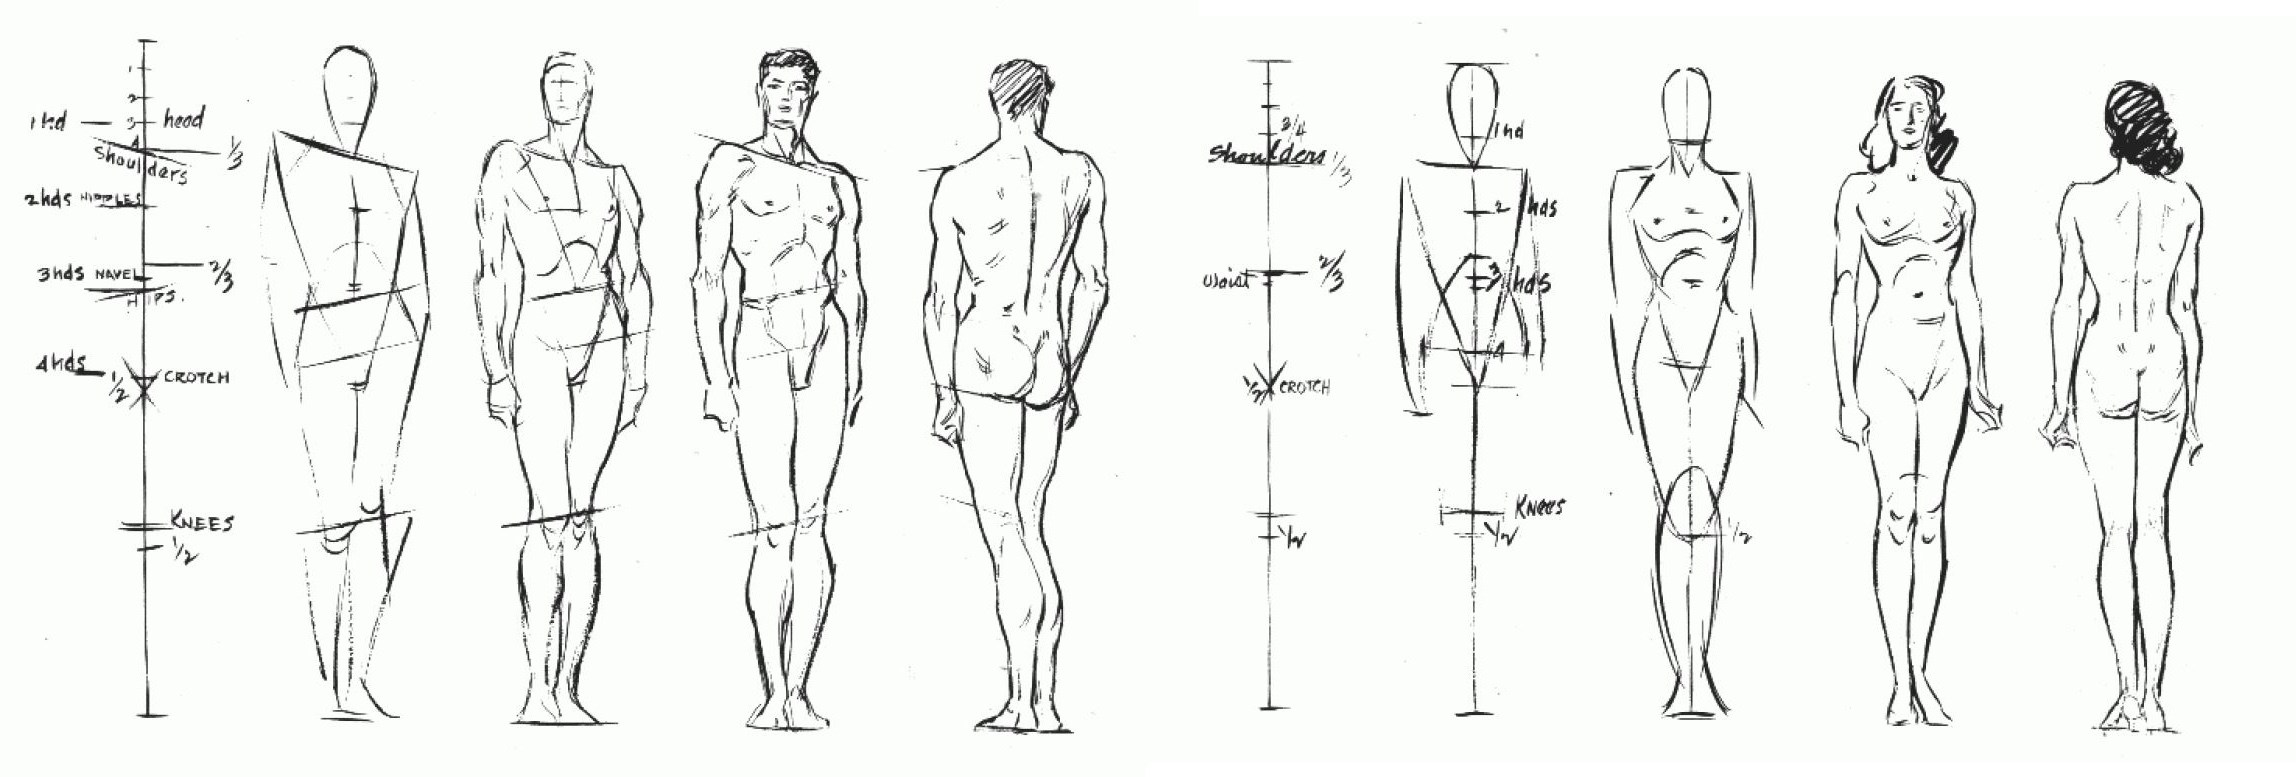 artistic anatomy robert beverly hale pdf converter